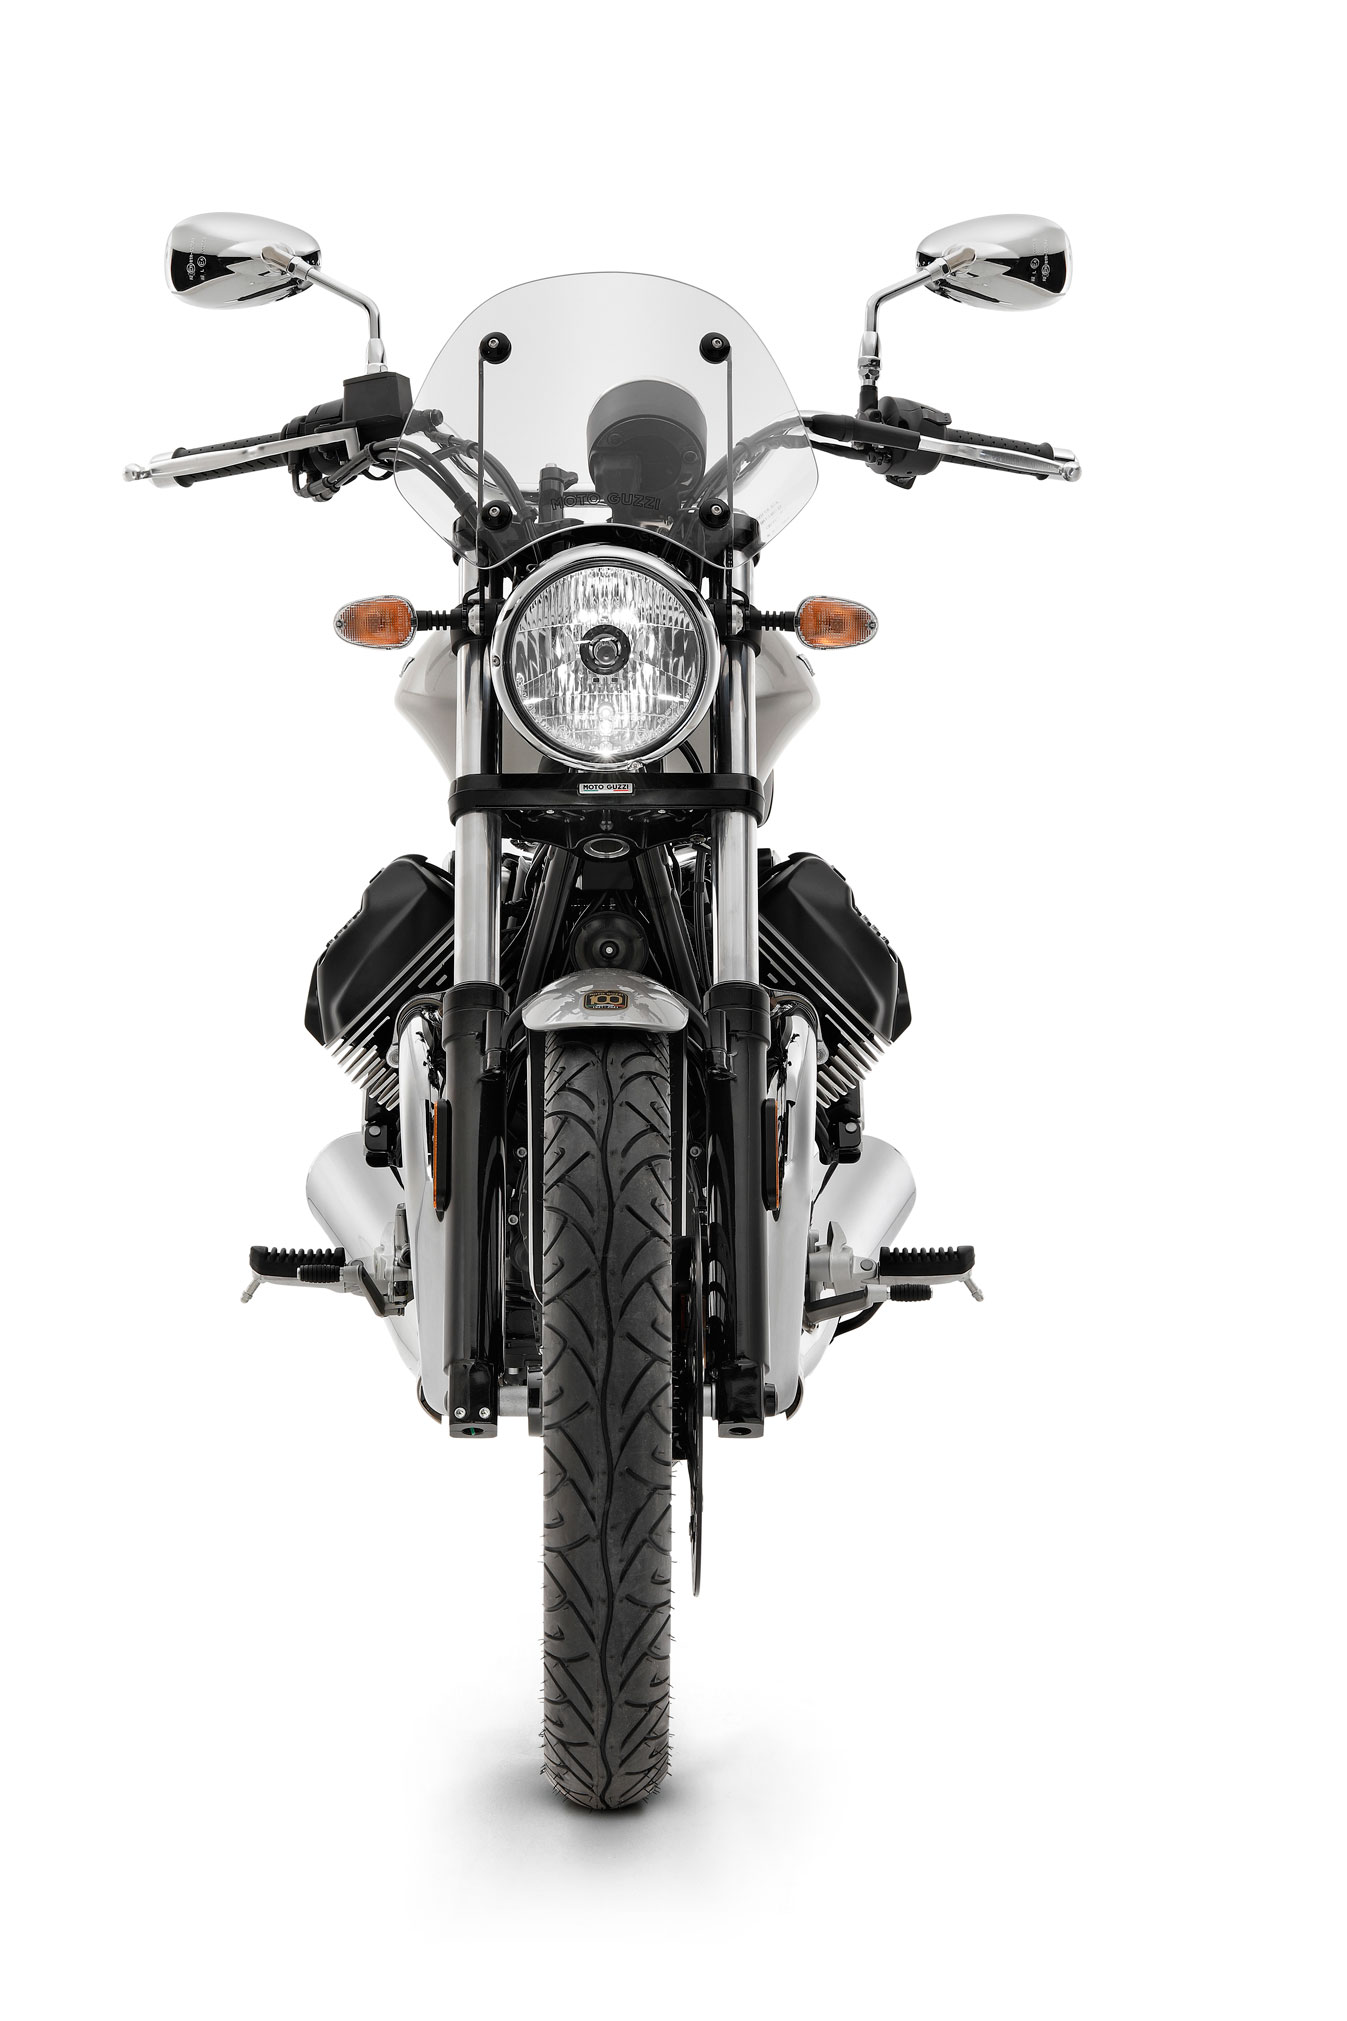 2021 Moto Guzzi V9 Roamer Guide • Total Motorcycle